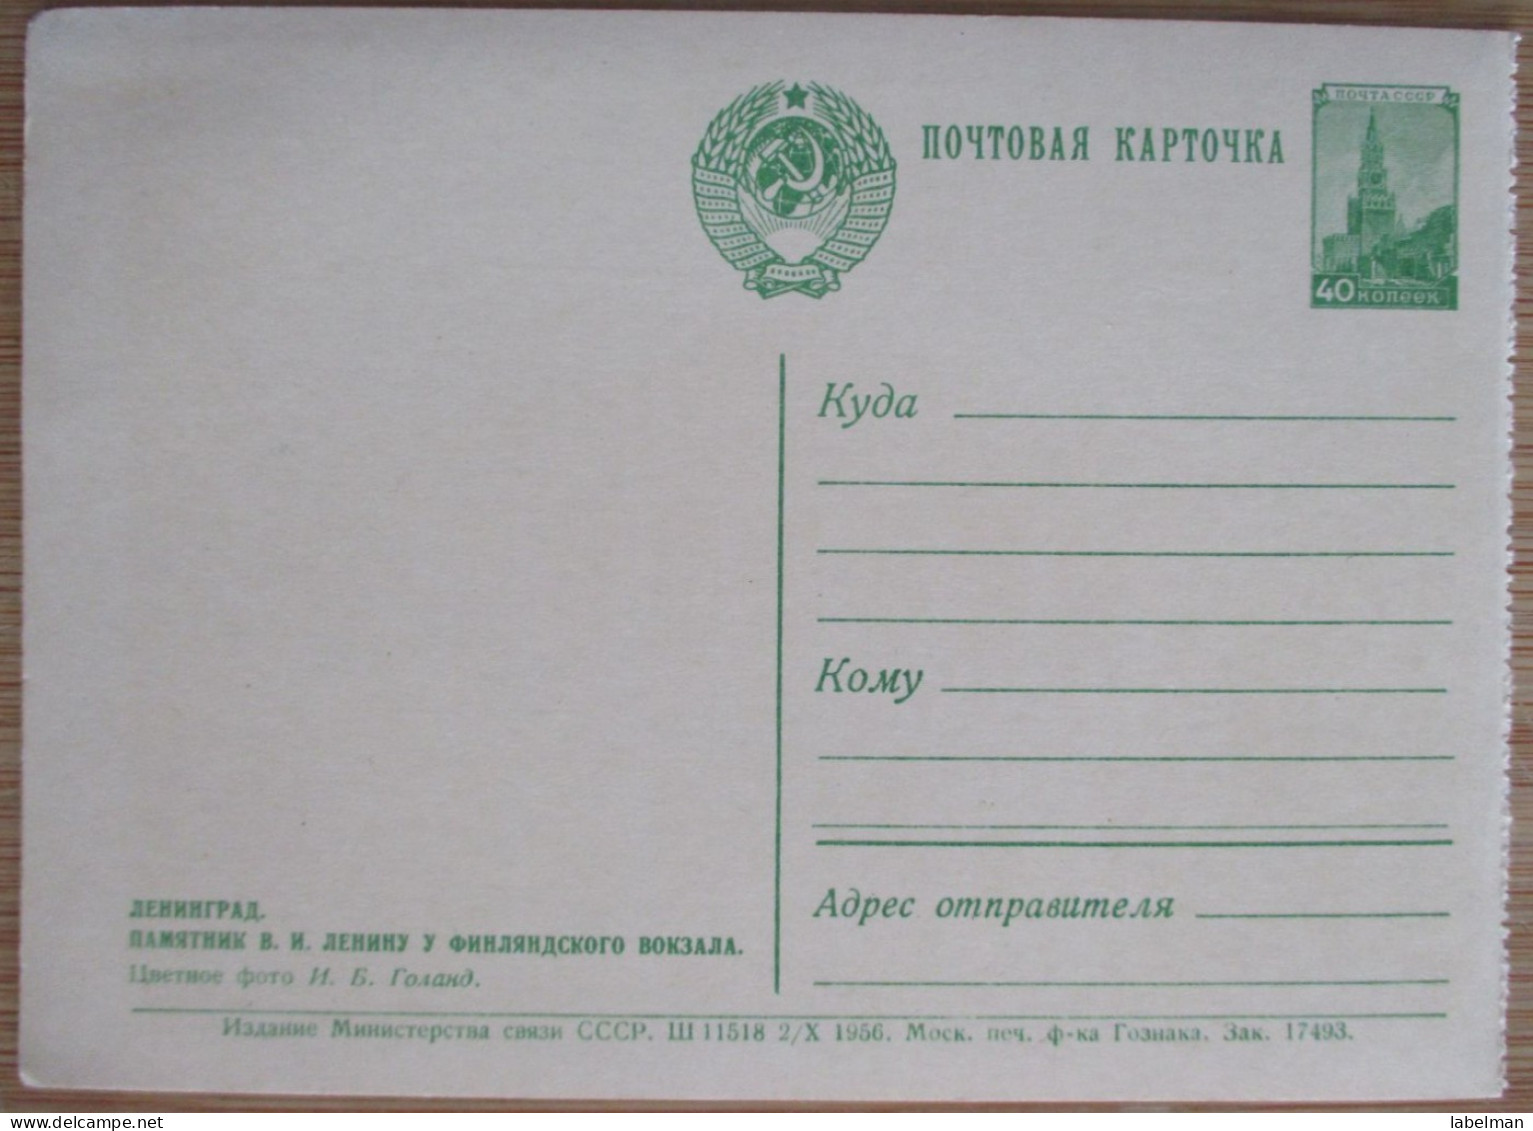 USSR RUSSIA CCCP MOSCOW TARJETA POSTAL CPA CARD CPM PC POSTCARD CARTOLINA ANSICHTSKARTE CARTE POSTALE POSTKARTE - Russia